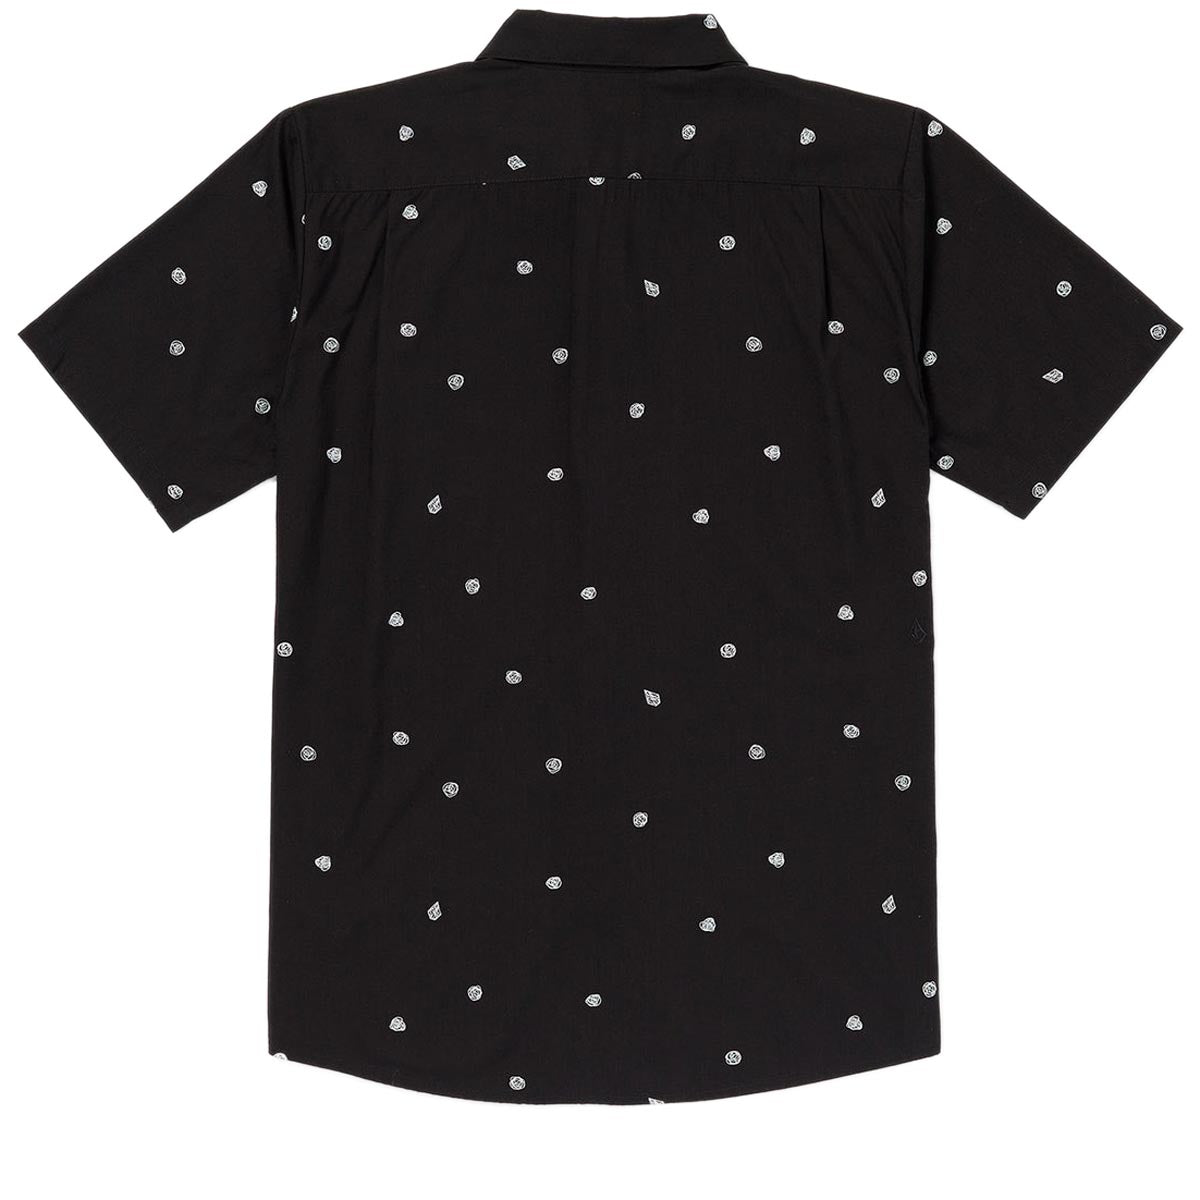 Volcom Interstone Shirt - Black image 2